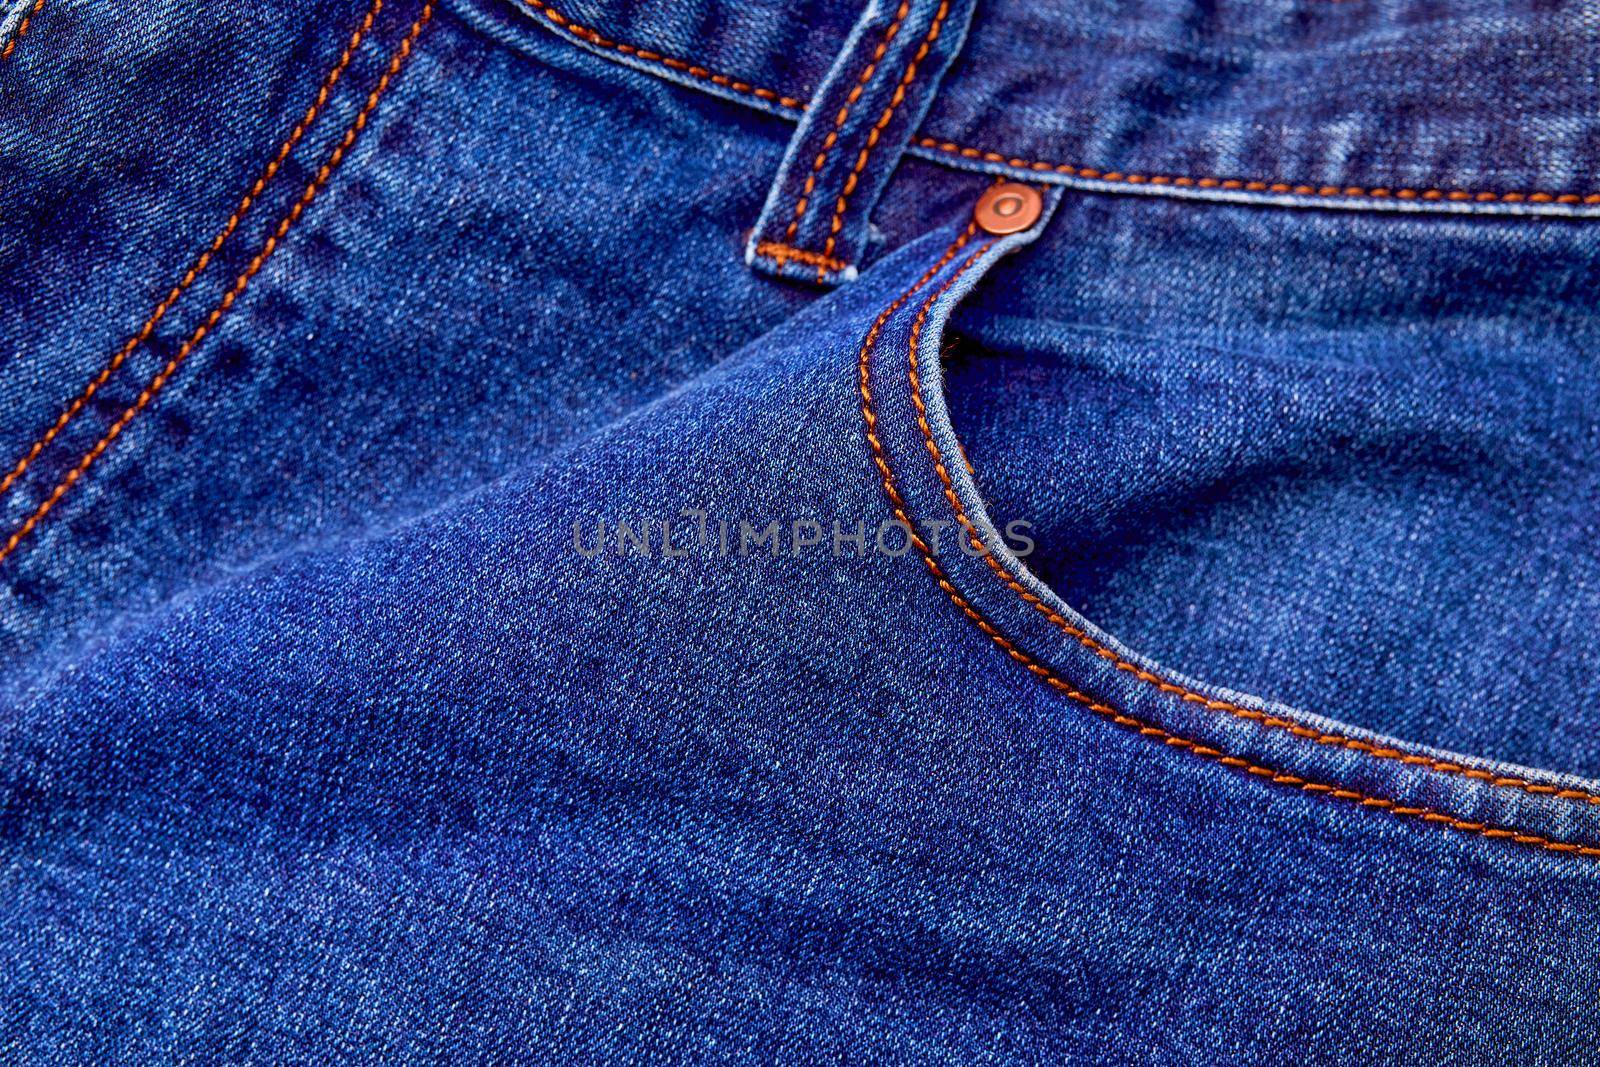 Blue denim jeans background pocket with seam and orange thread stitches. Casual urban classic fashion